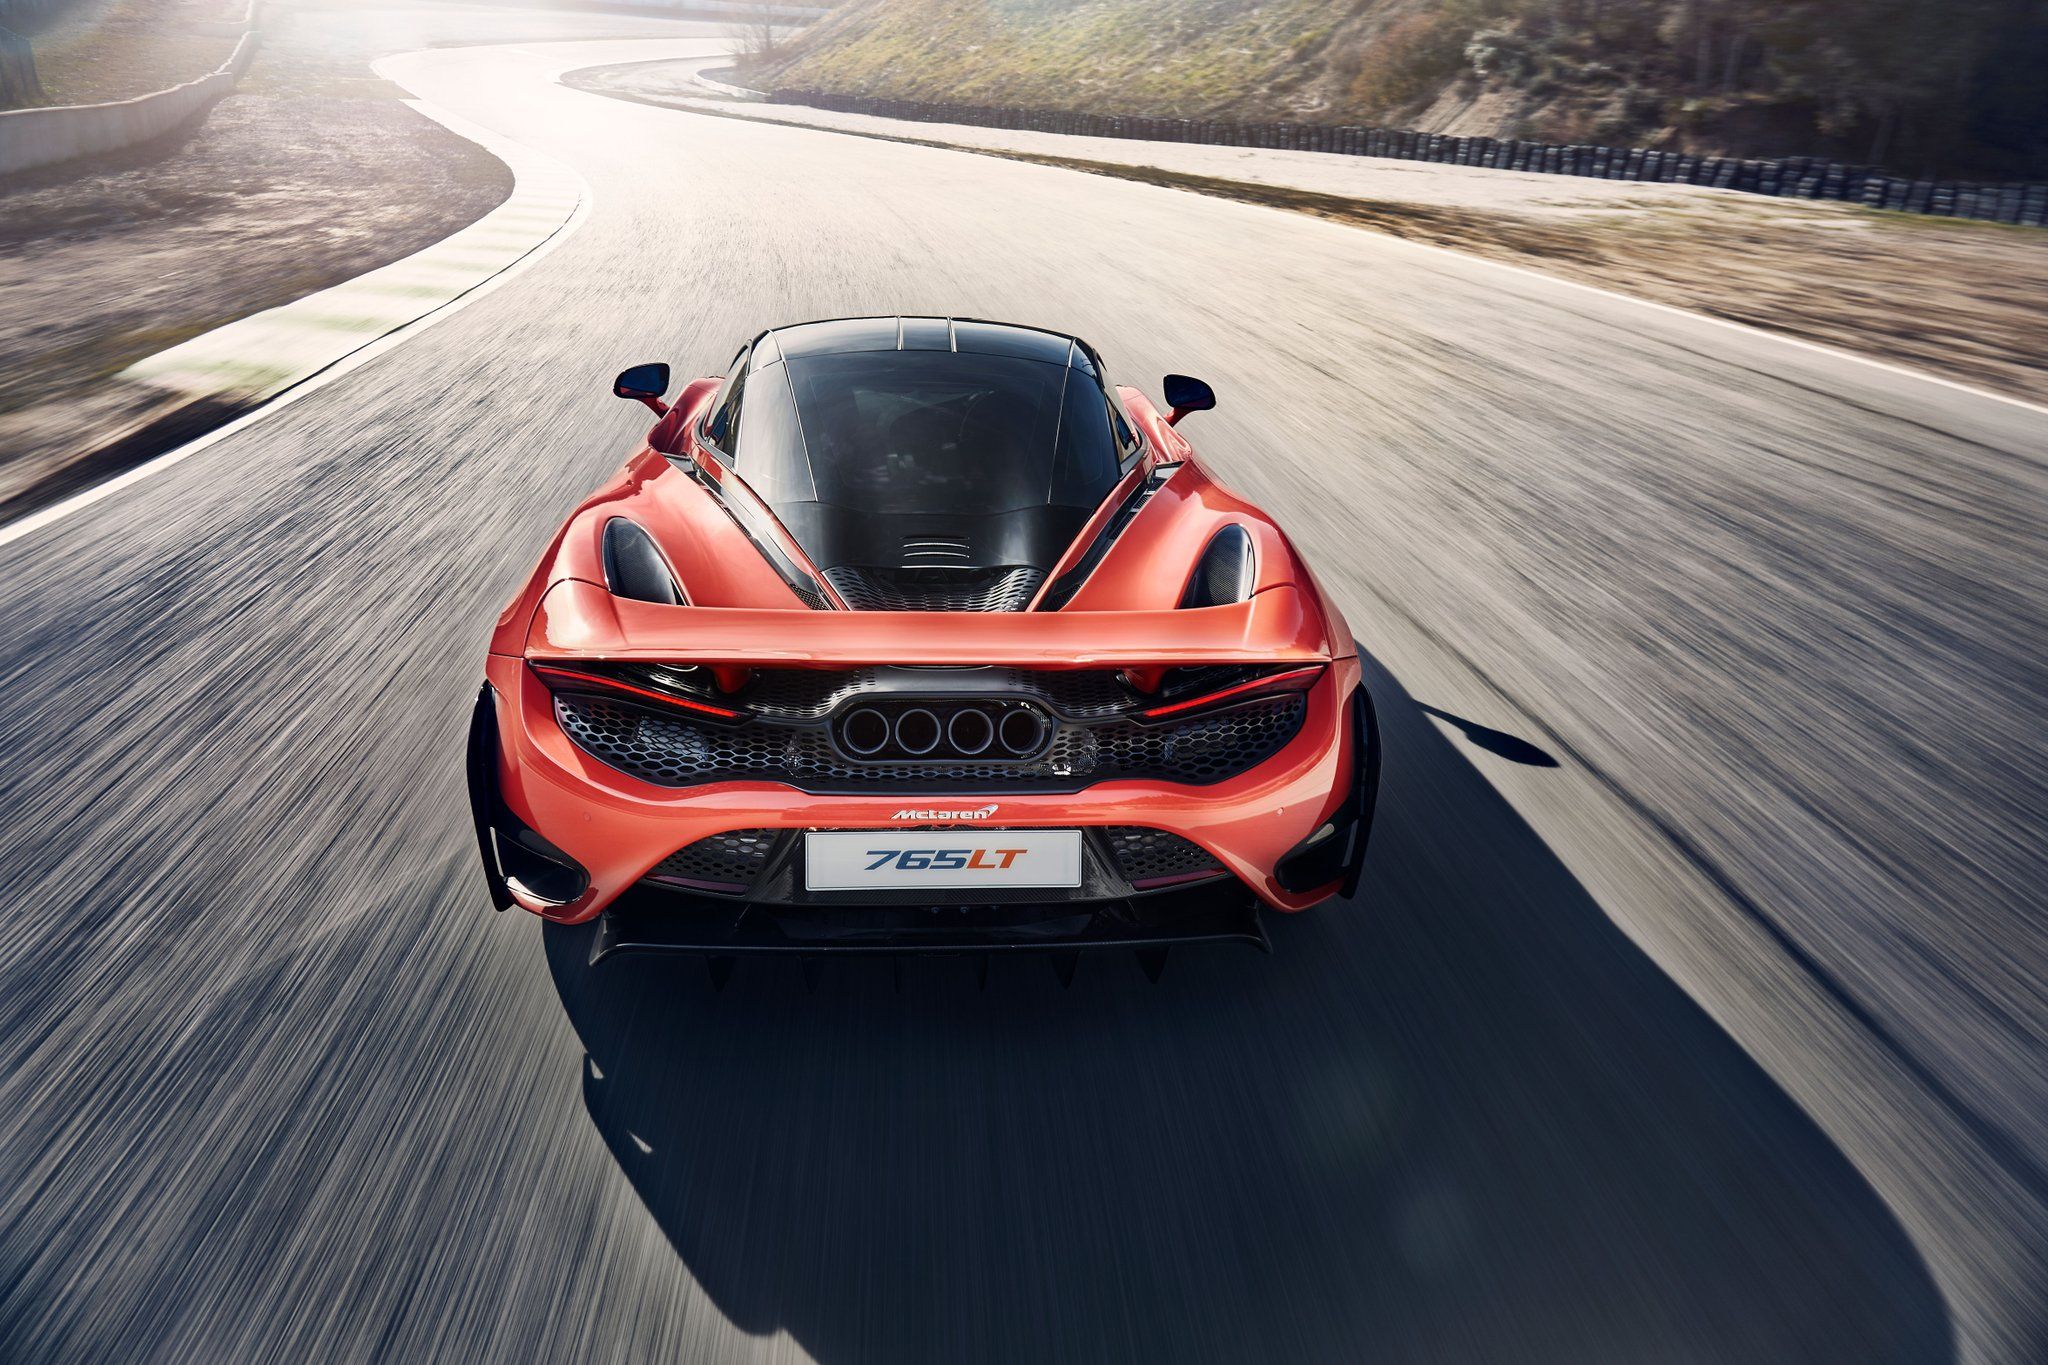 McLaren Automotive 765LT elevates the attributes